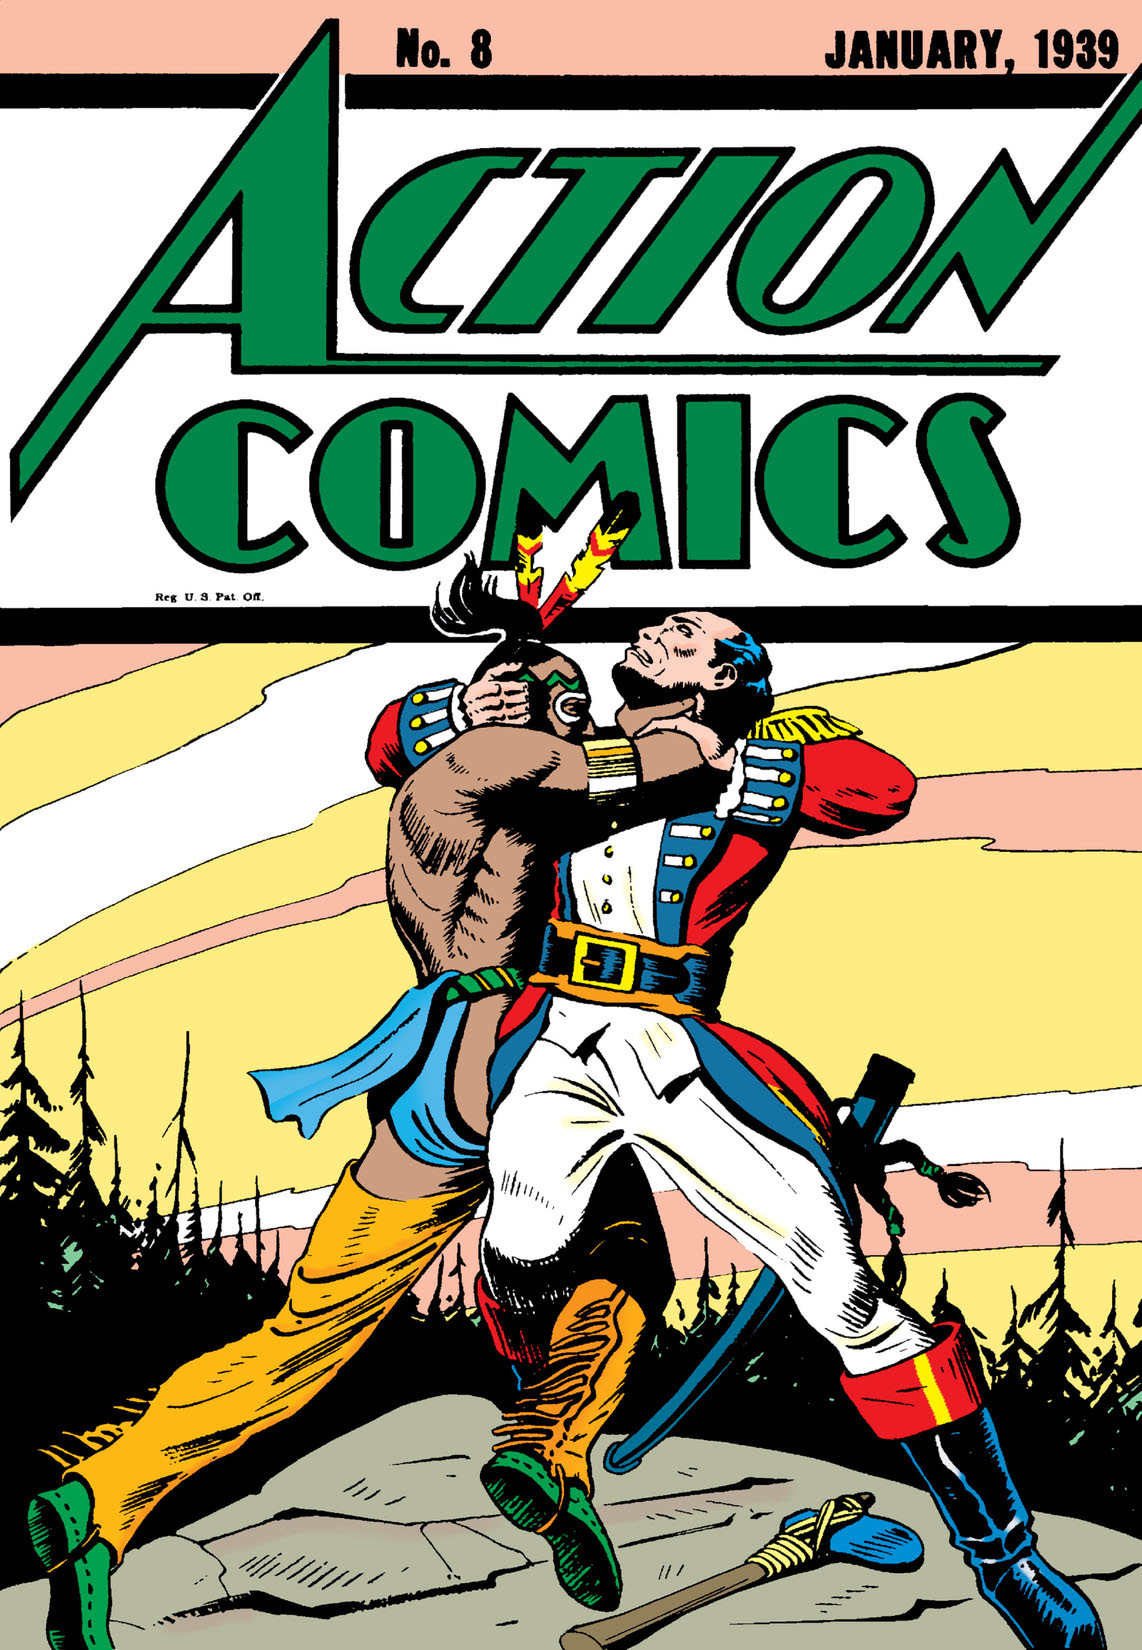 Action Comics (1938-) #8 preview images